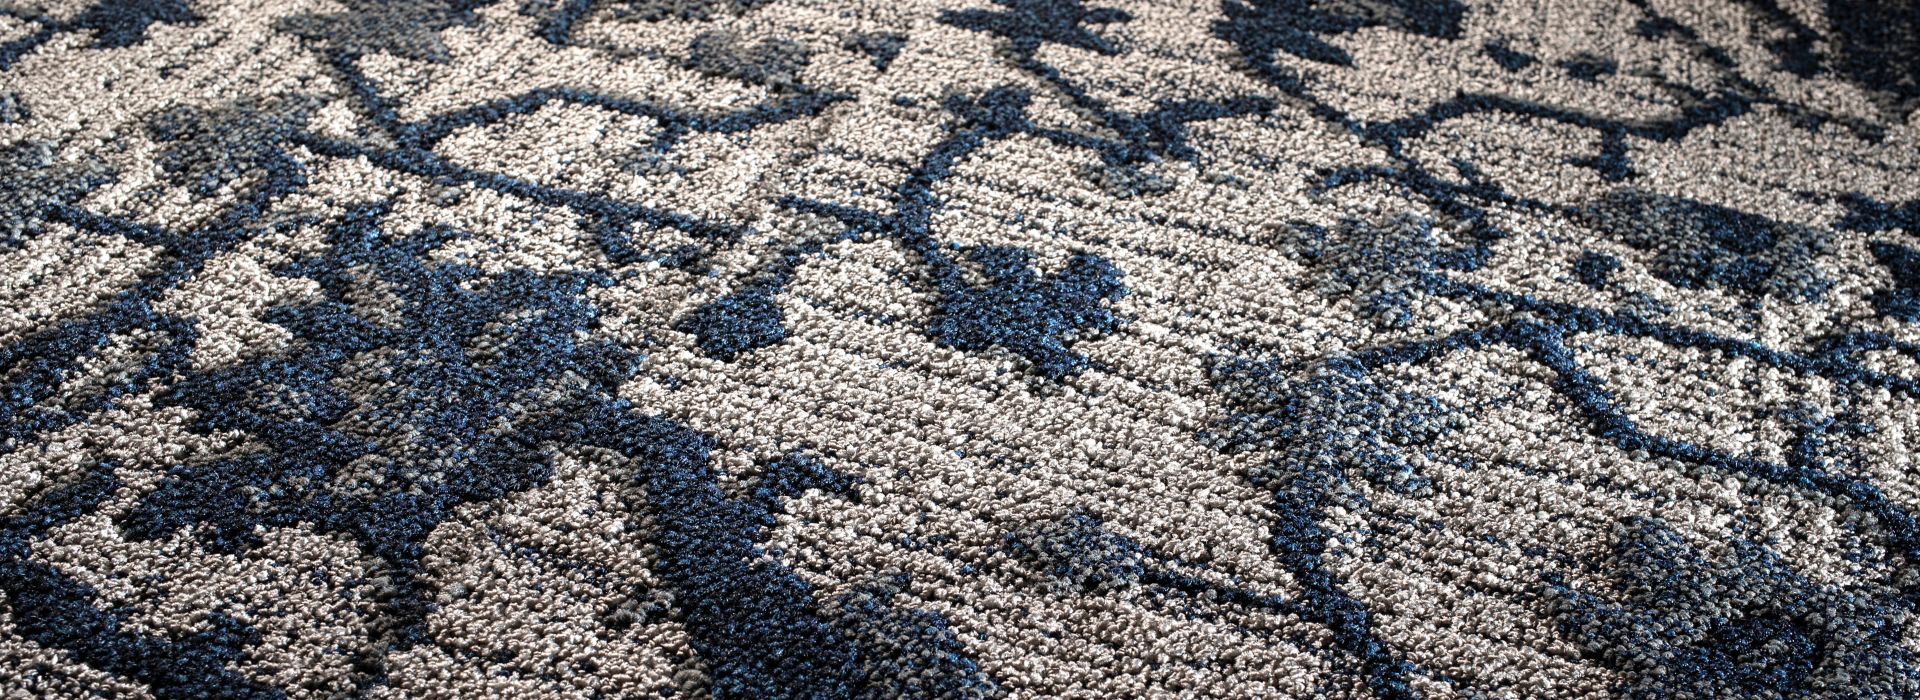 Interface Decades carpet tile 